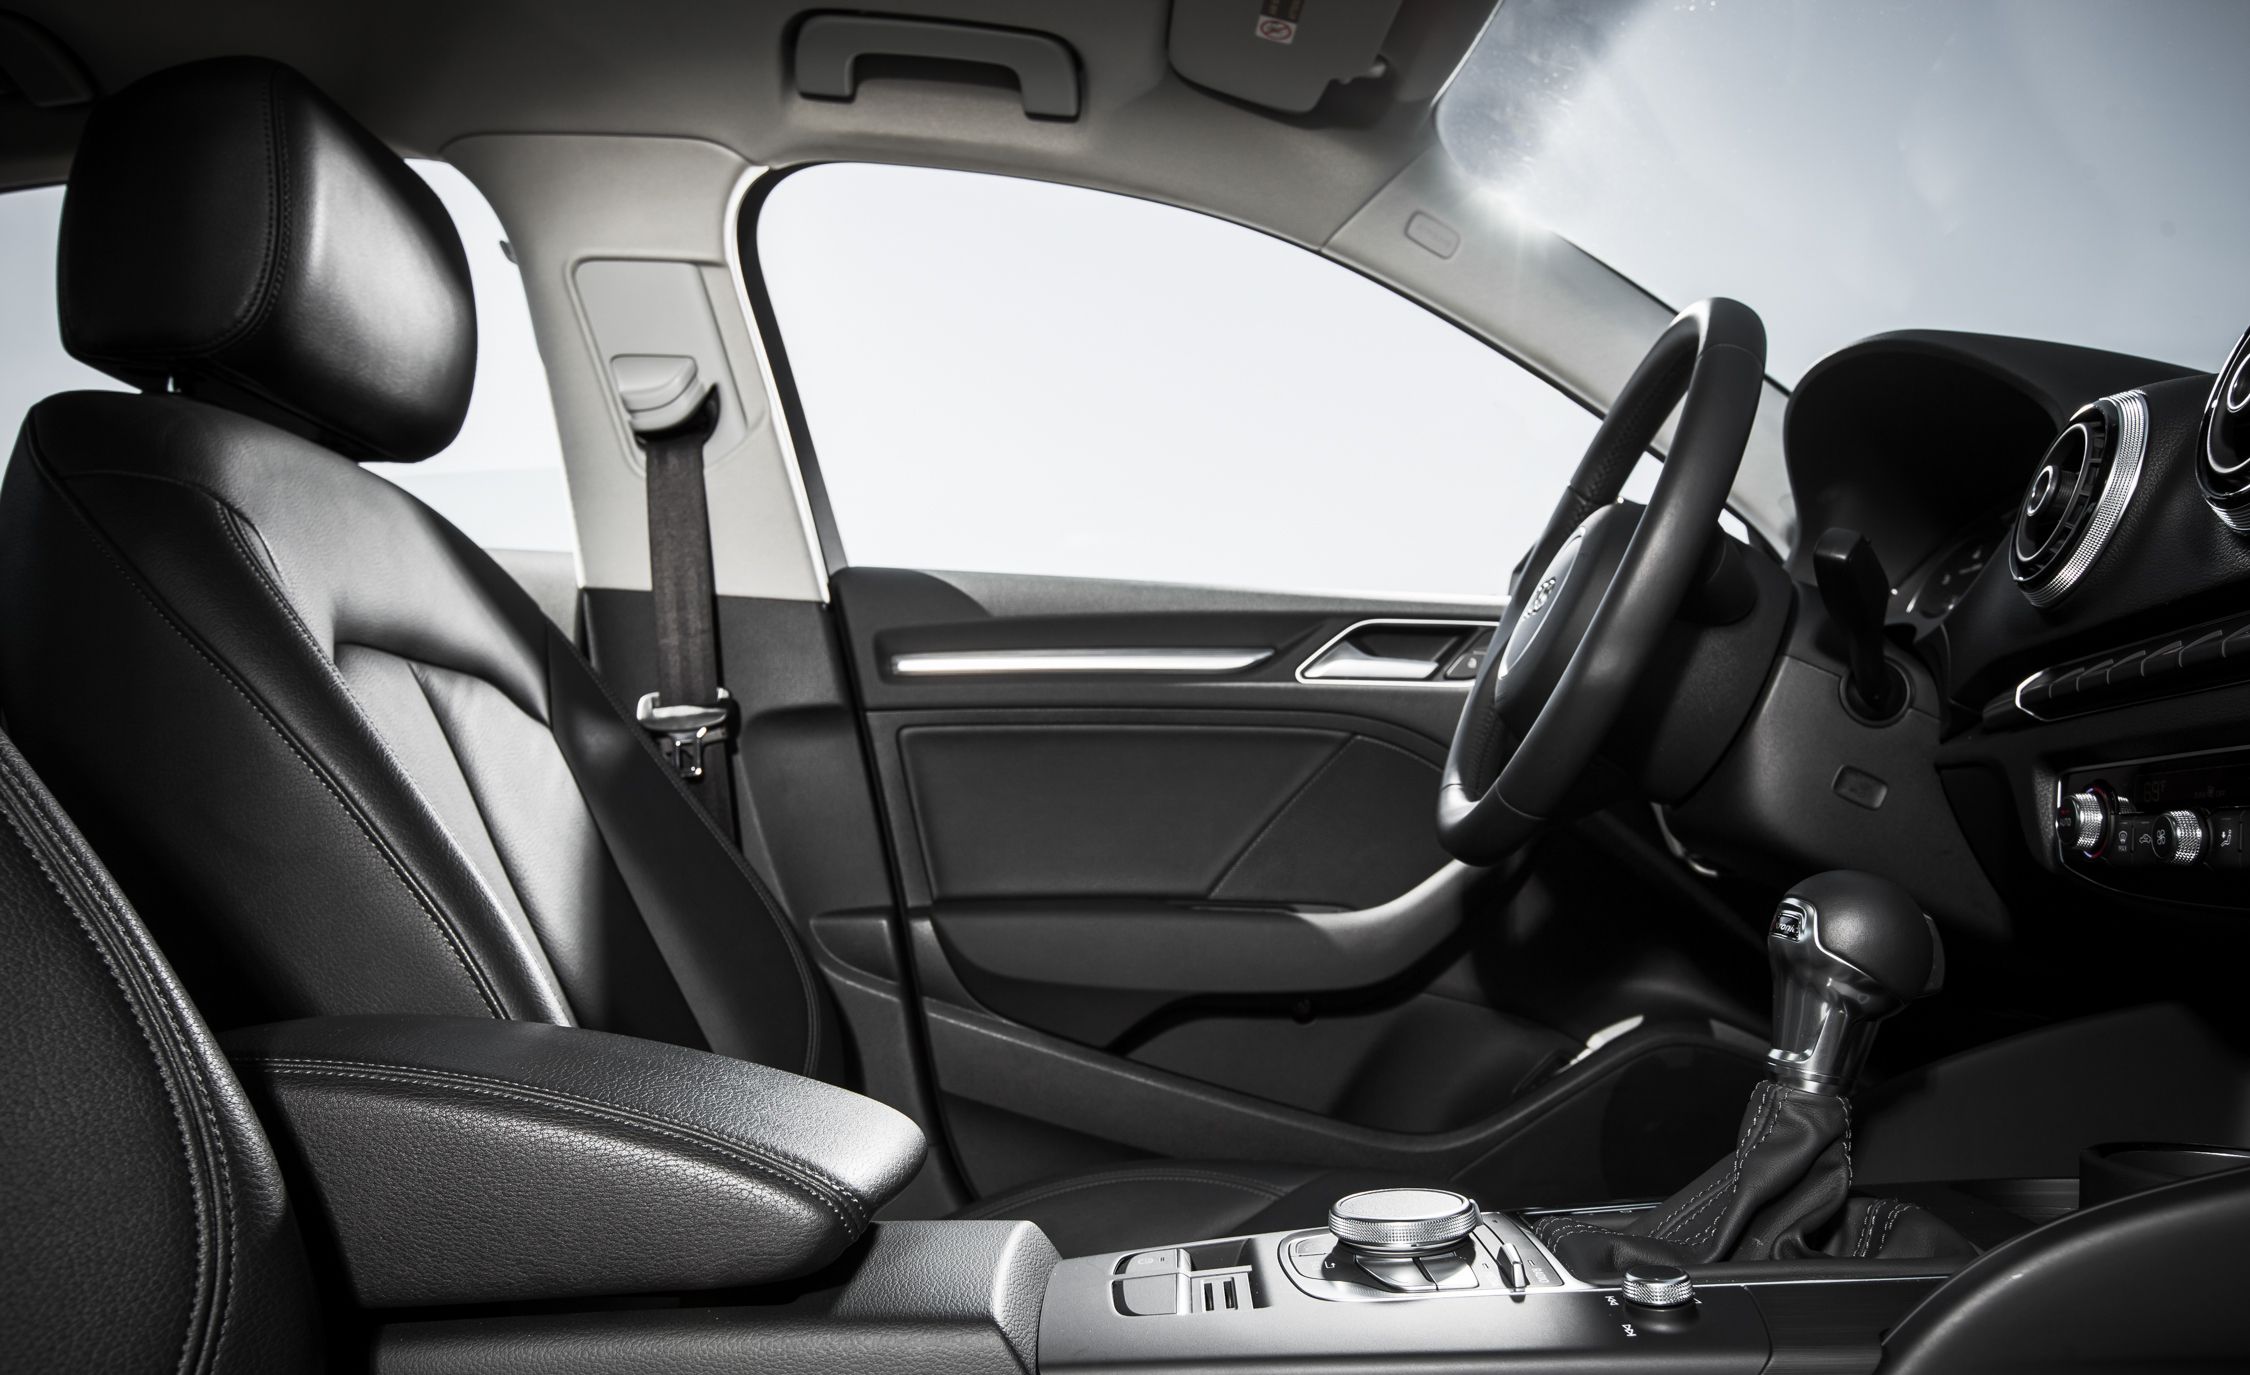 2015 Audi A3 TDI Interior Seats Cockpit (View 18 of 50)